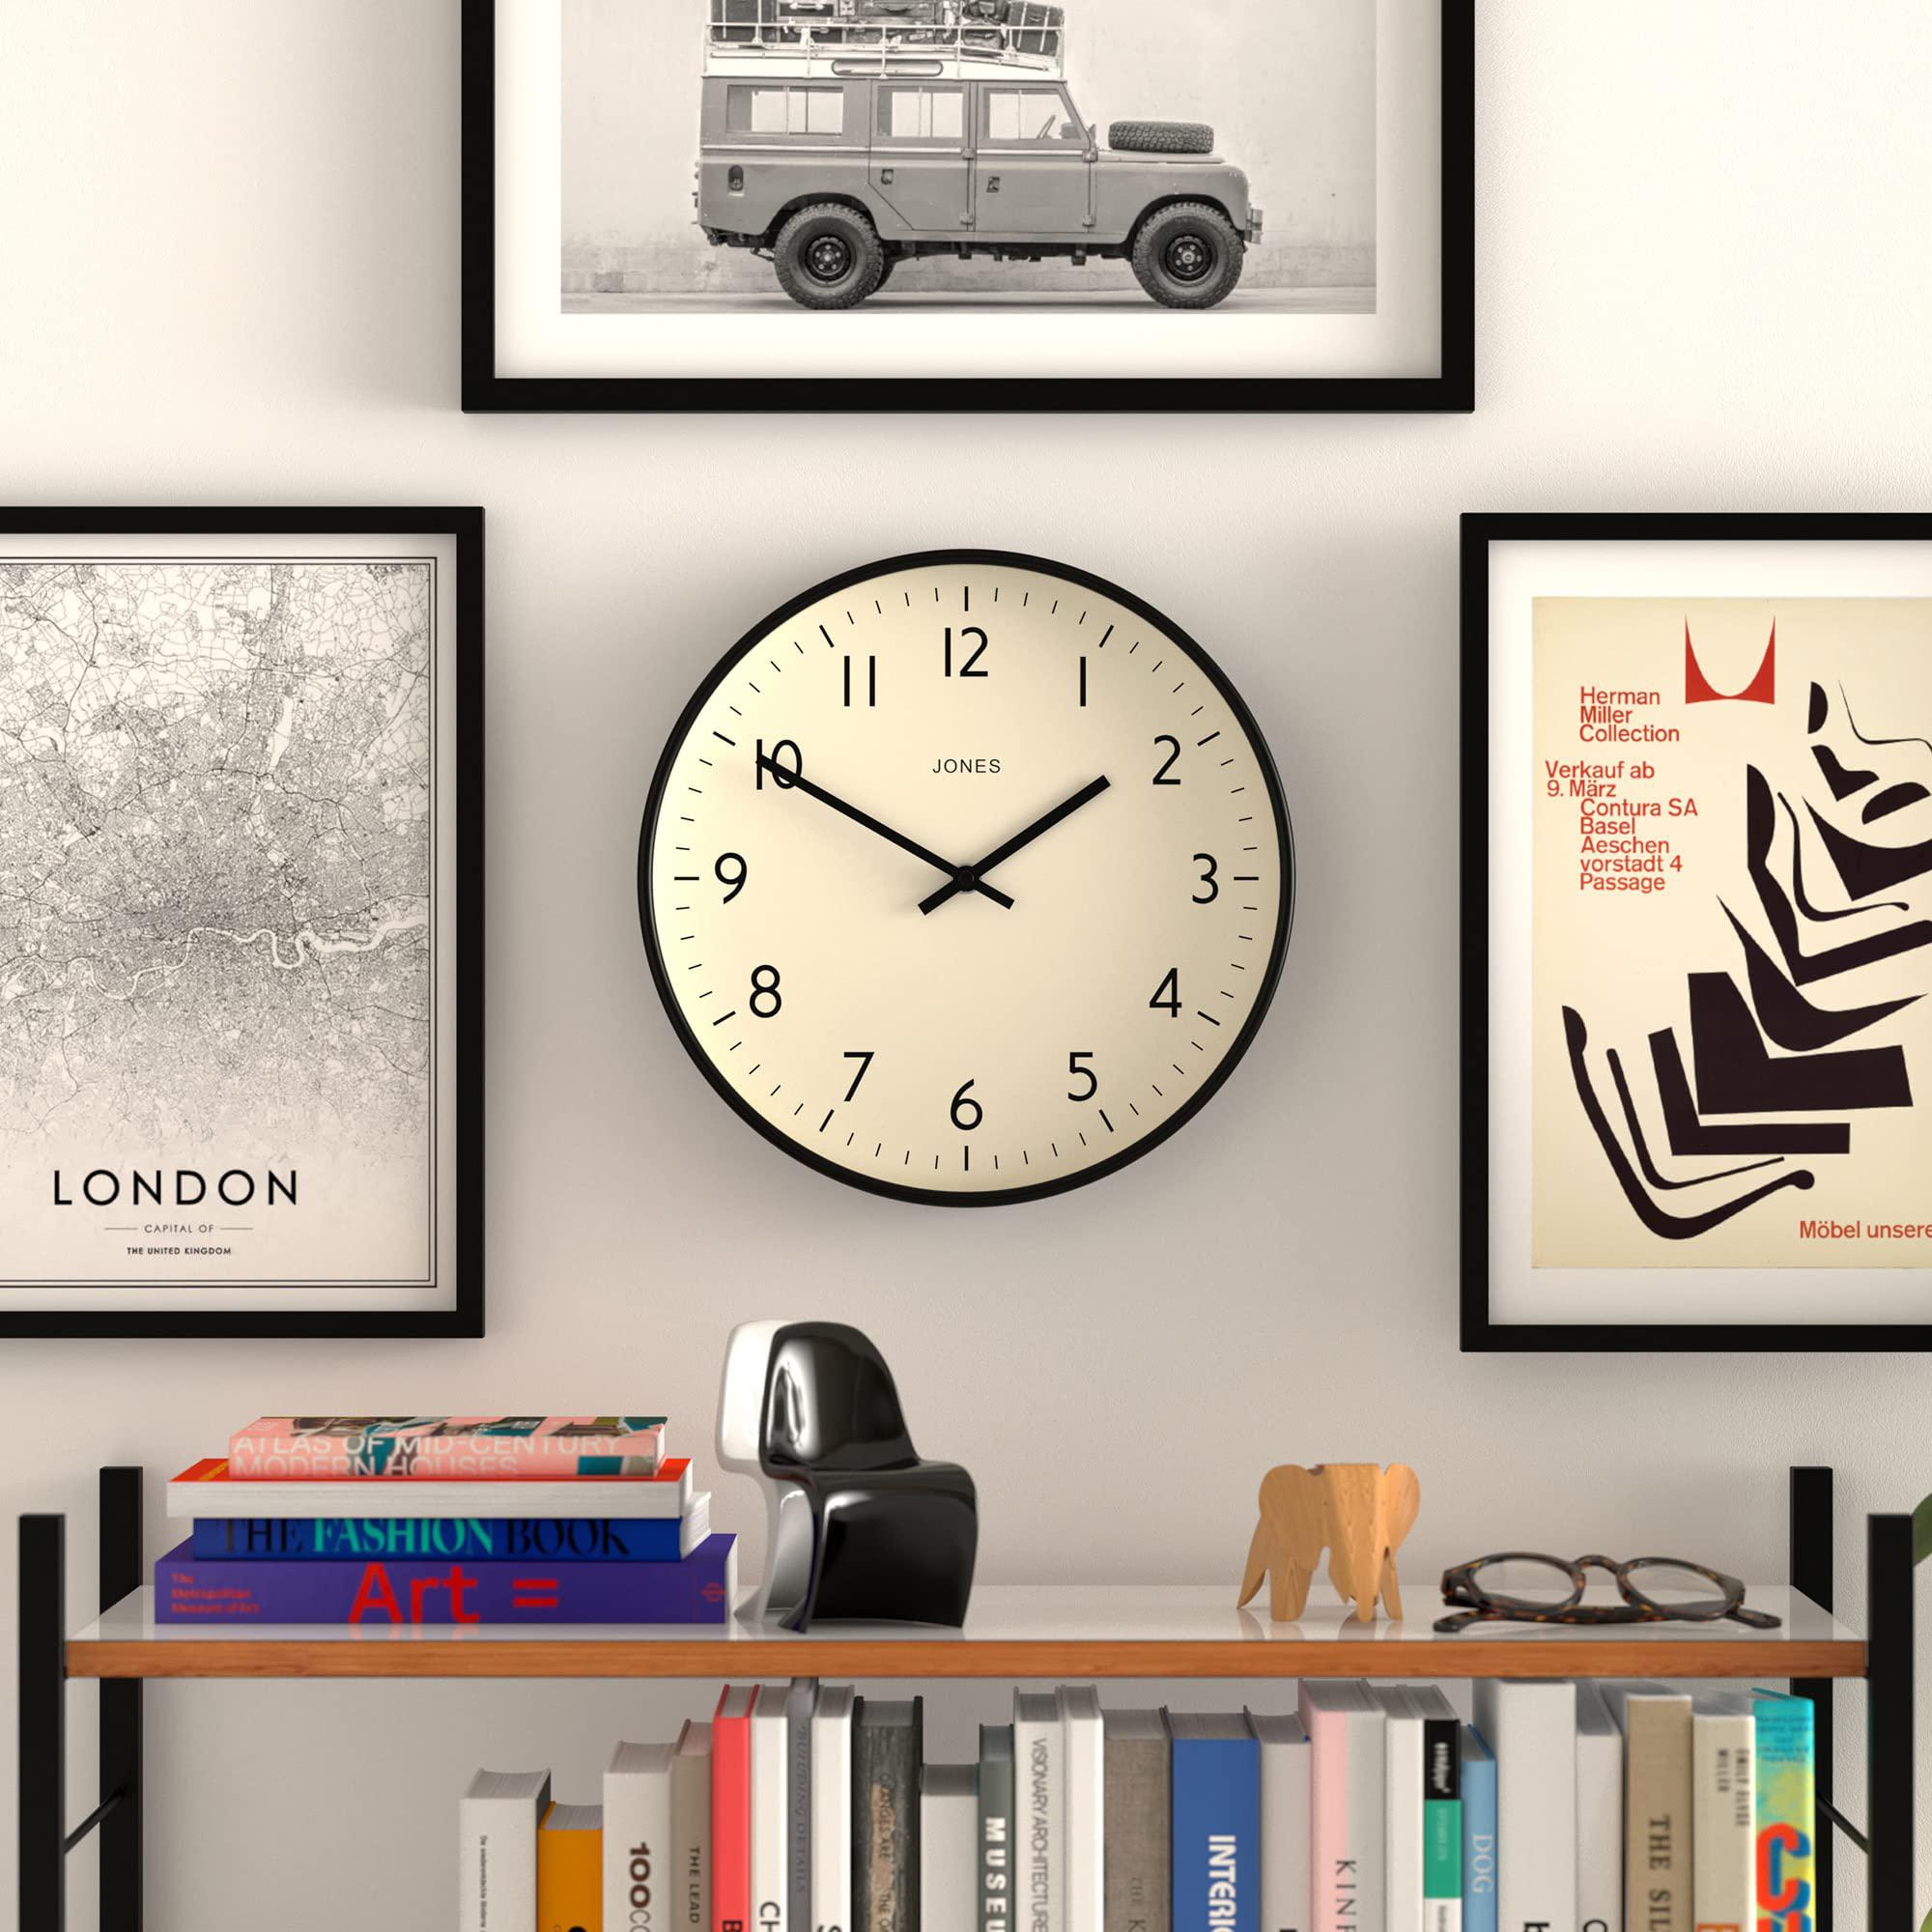 jones clocks studio round wall clock - round clock - modern clock - designer clock - kitchen clock - living room clock - offi